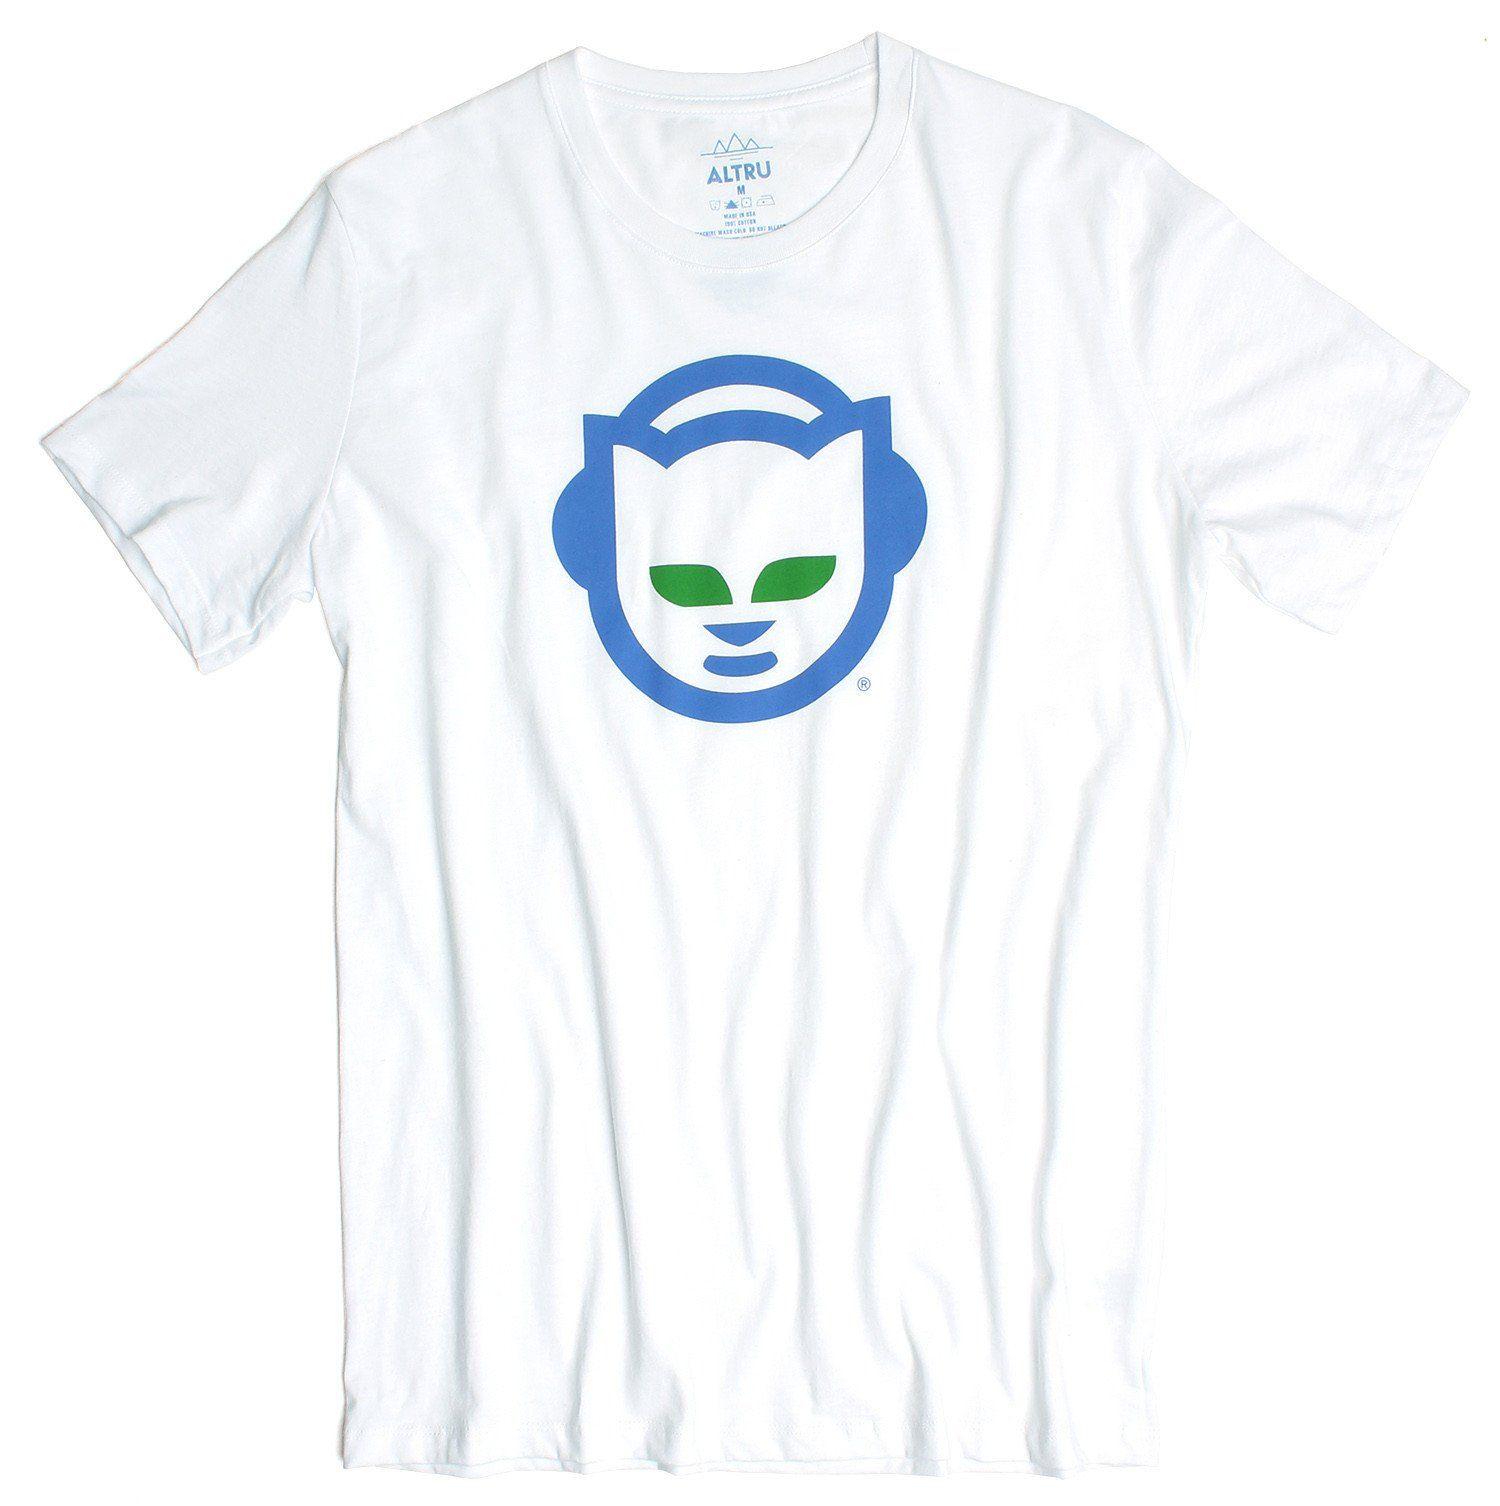 Napster Logo - Napster LOGO T-Shirt - Altru Apparel